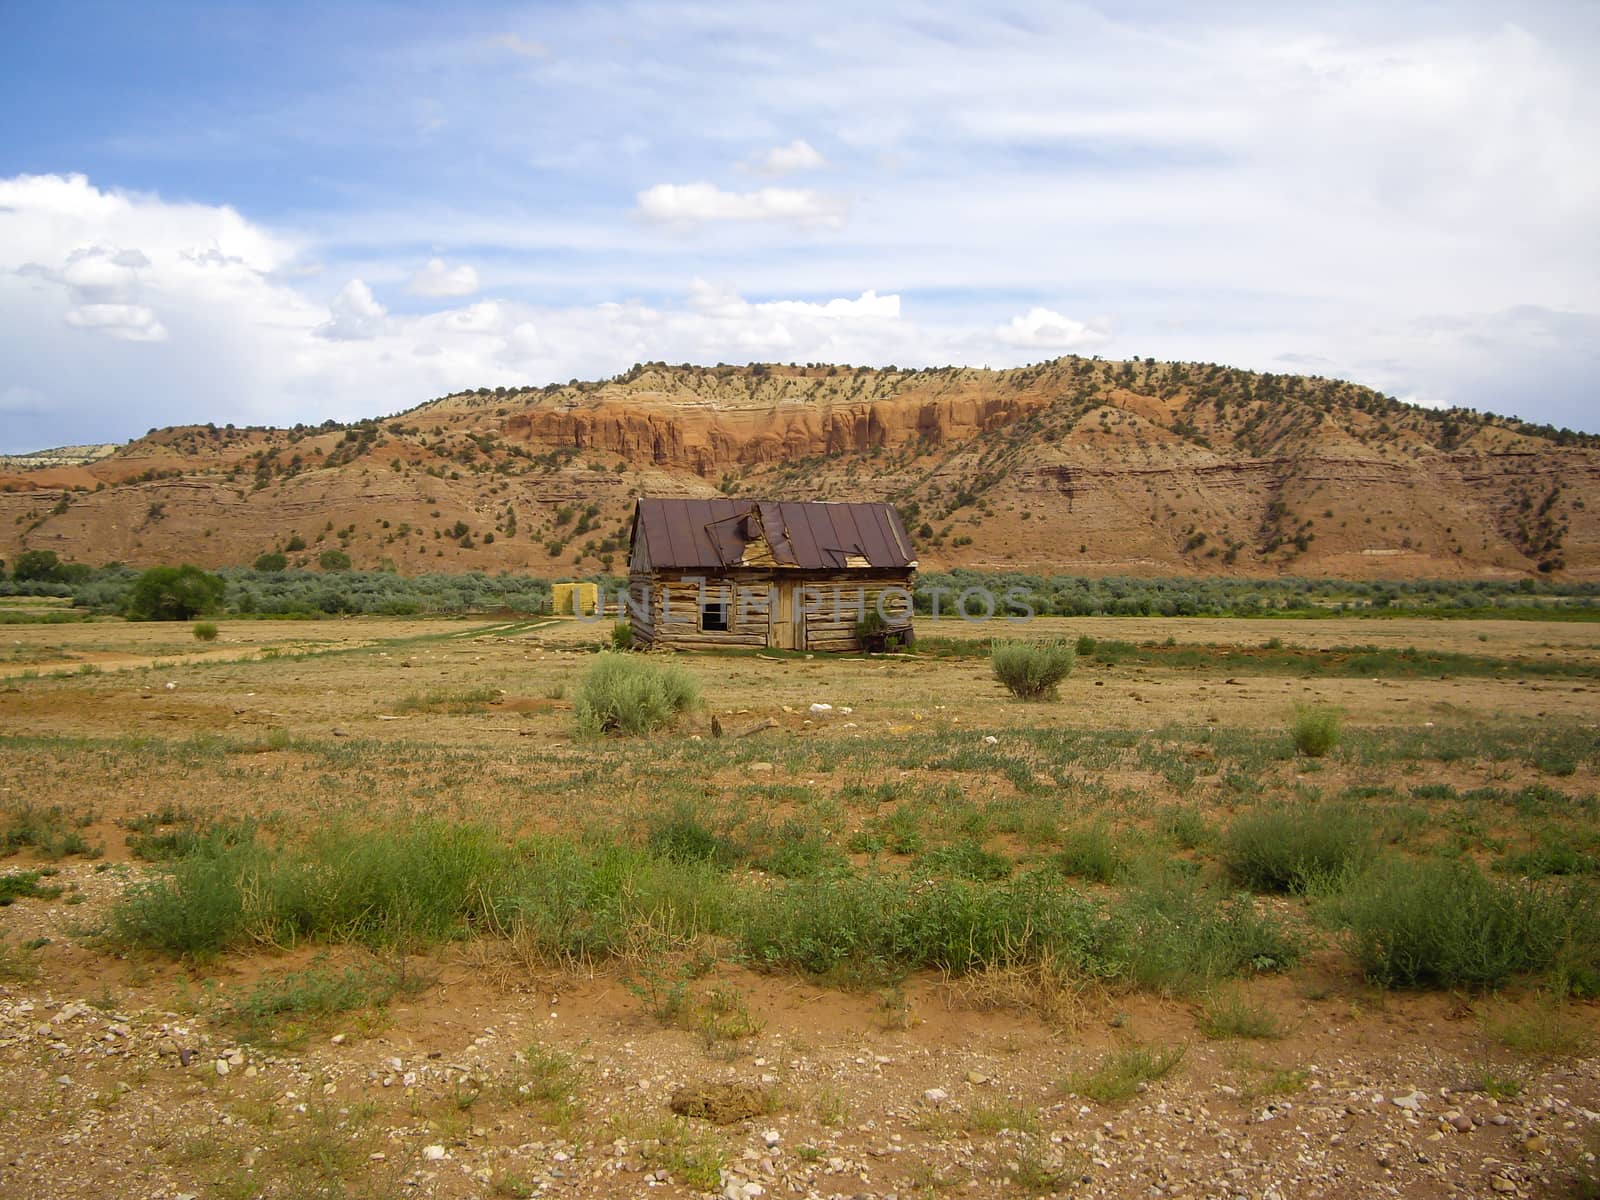 Abandoned cabin in rural Utah desert by emattil